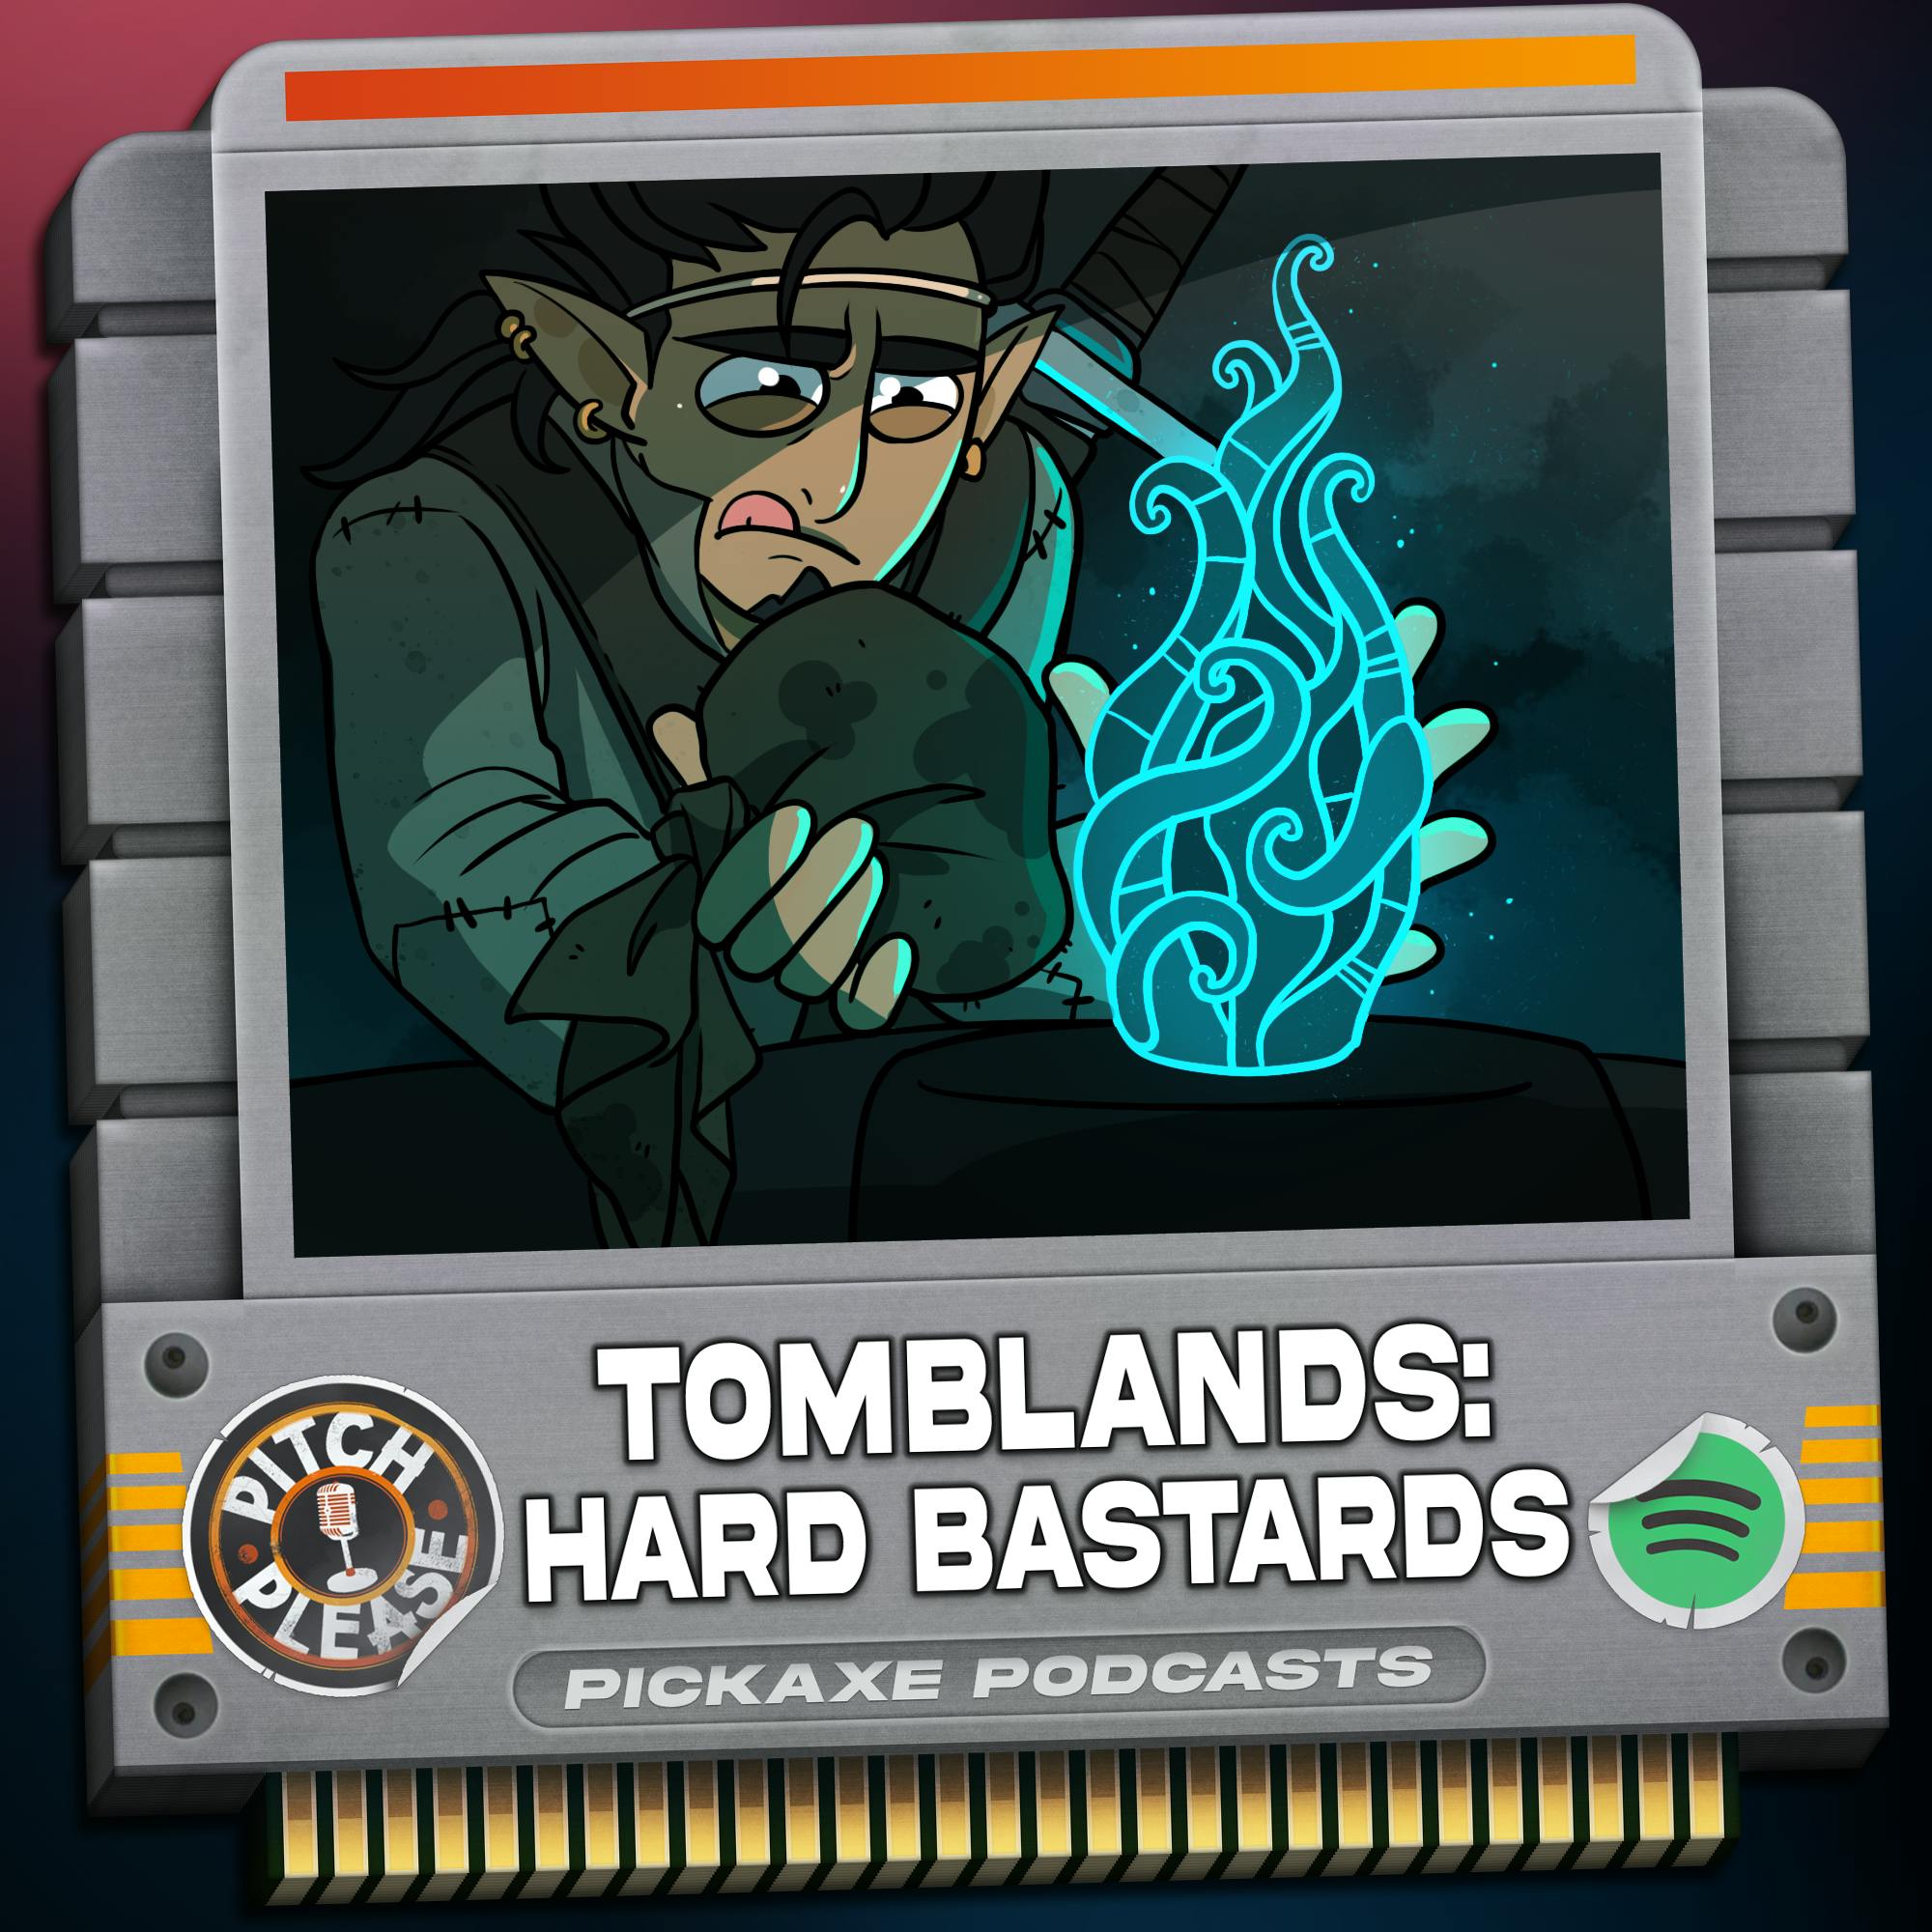 Pitch, Please - Tomblands: Hard Bastards